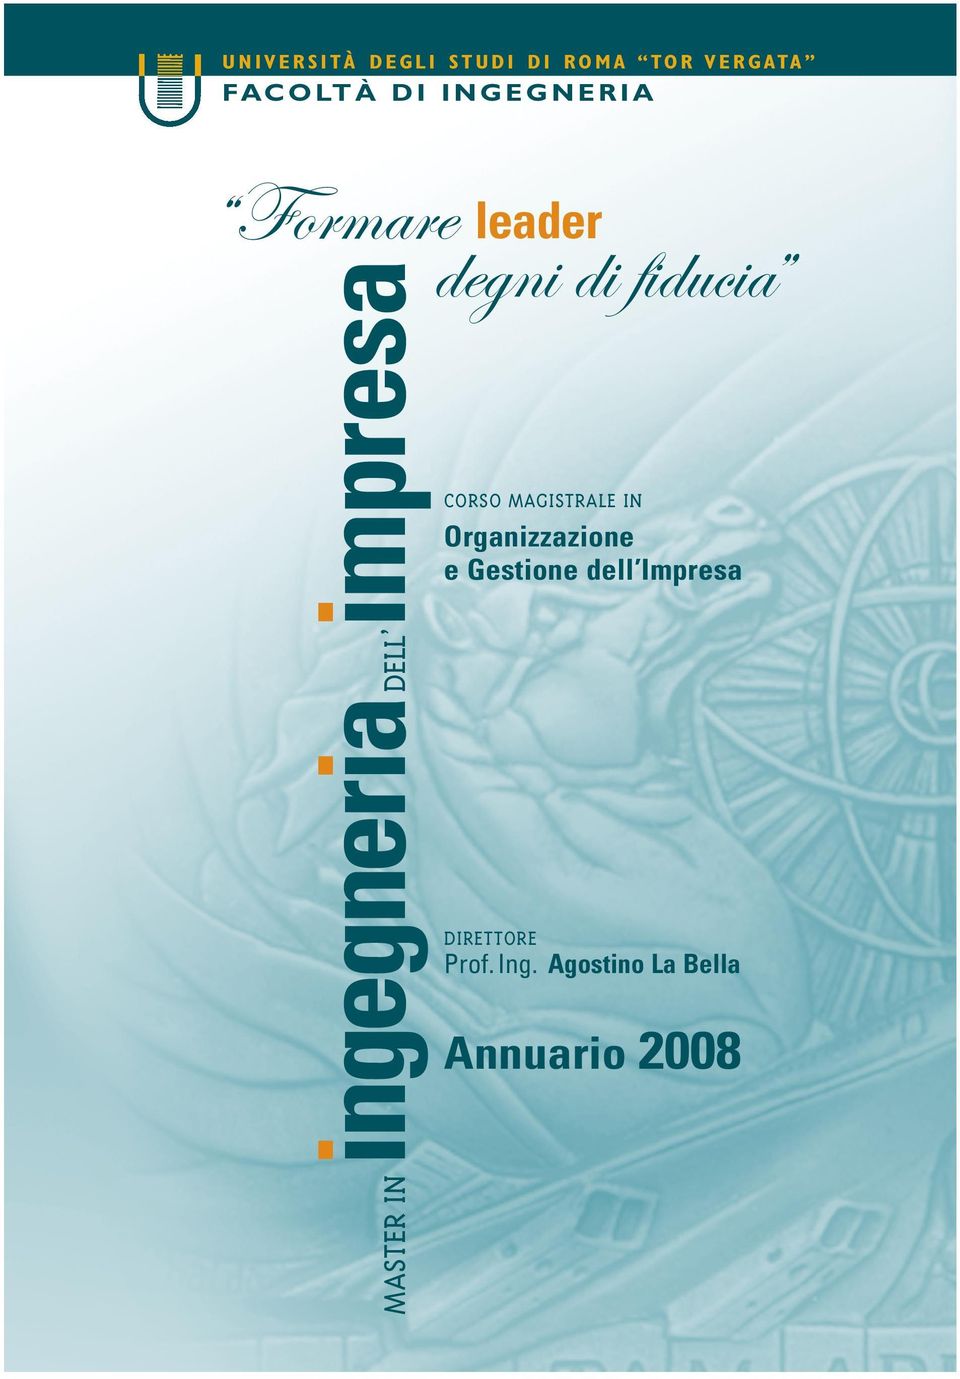 Ingegneria Via del Politecnico 1, 00133 Roma Tel. +39 06 72597361-7302 Fax +39 06 72597305 Web: www.masterimpresa.